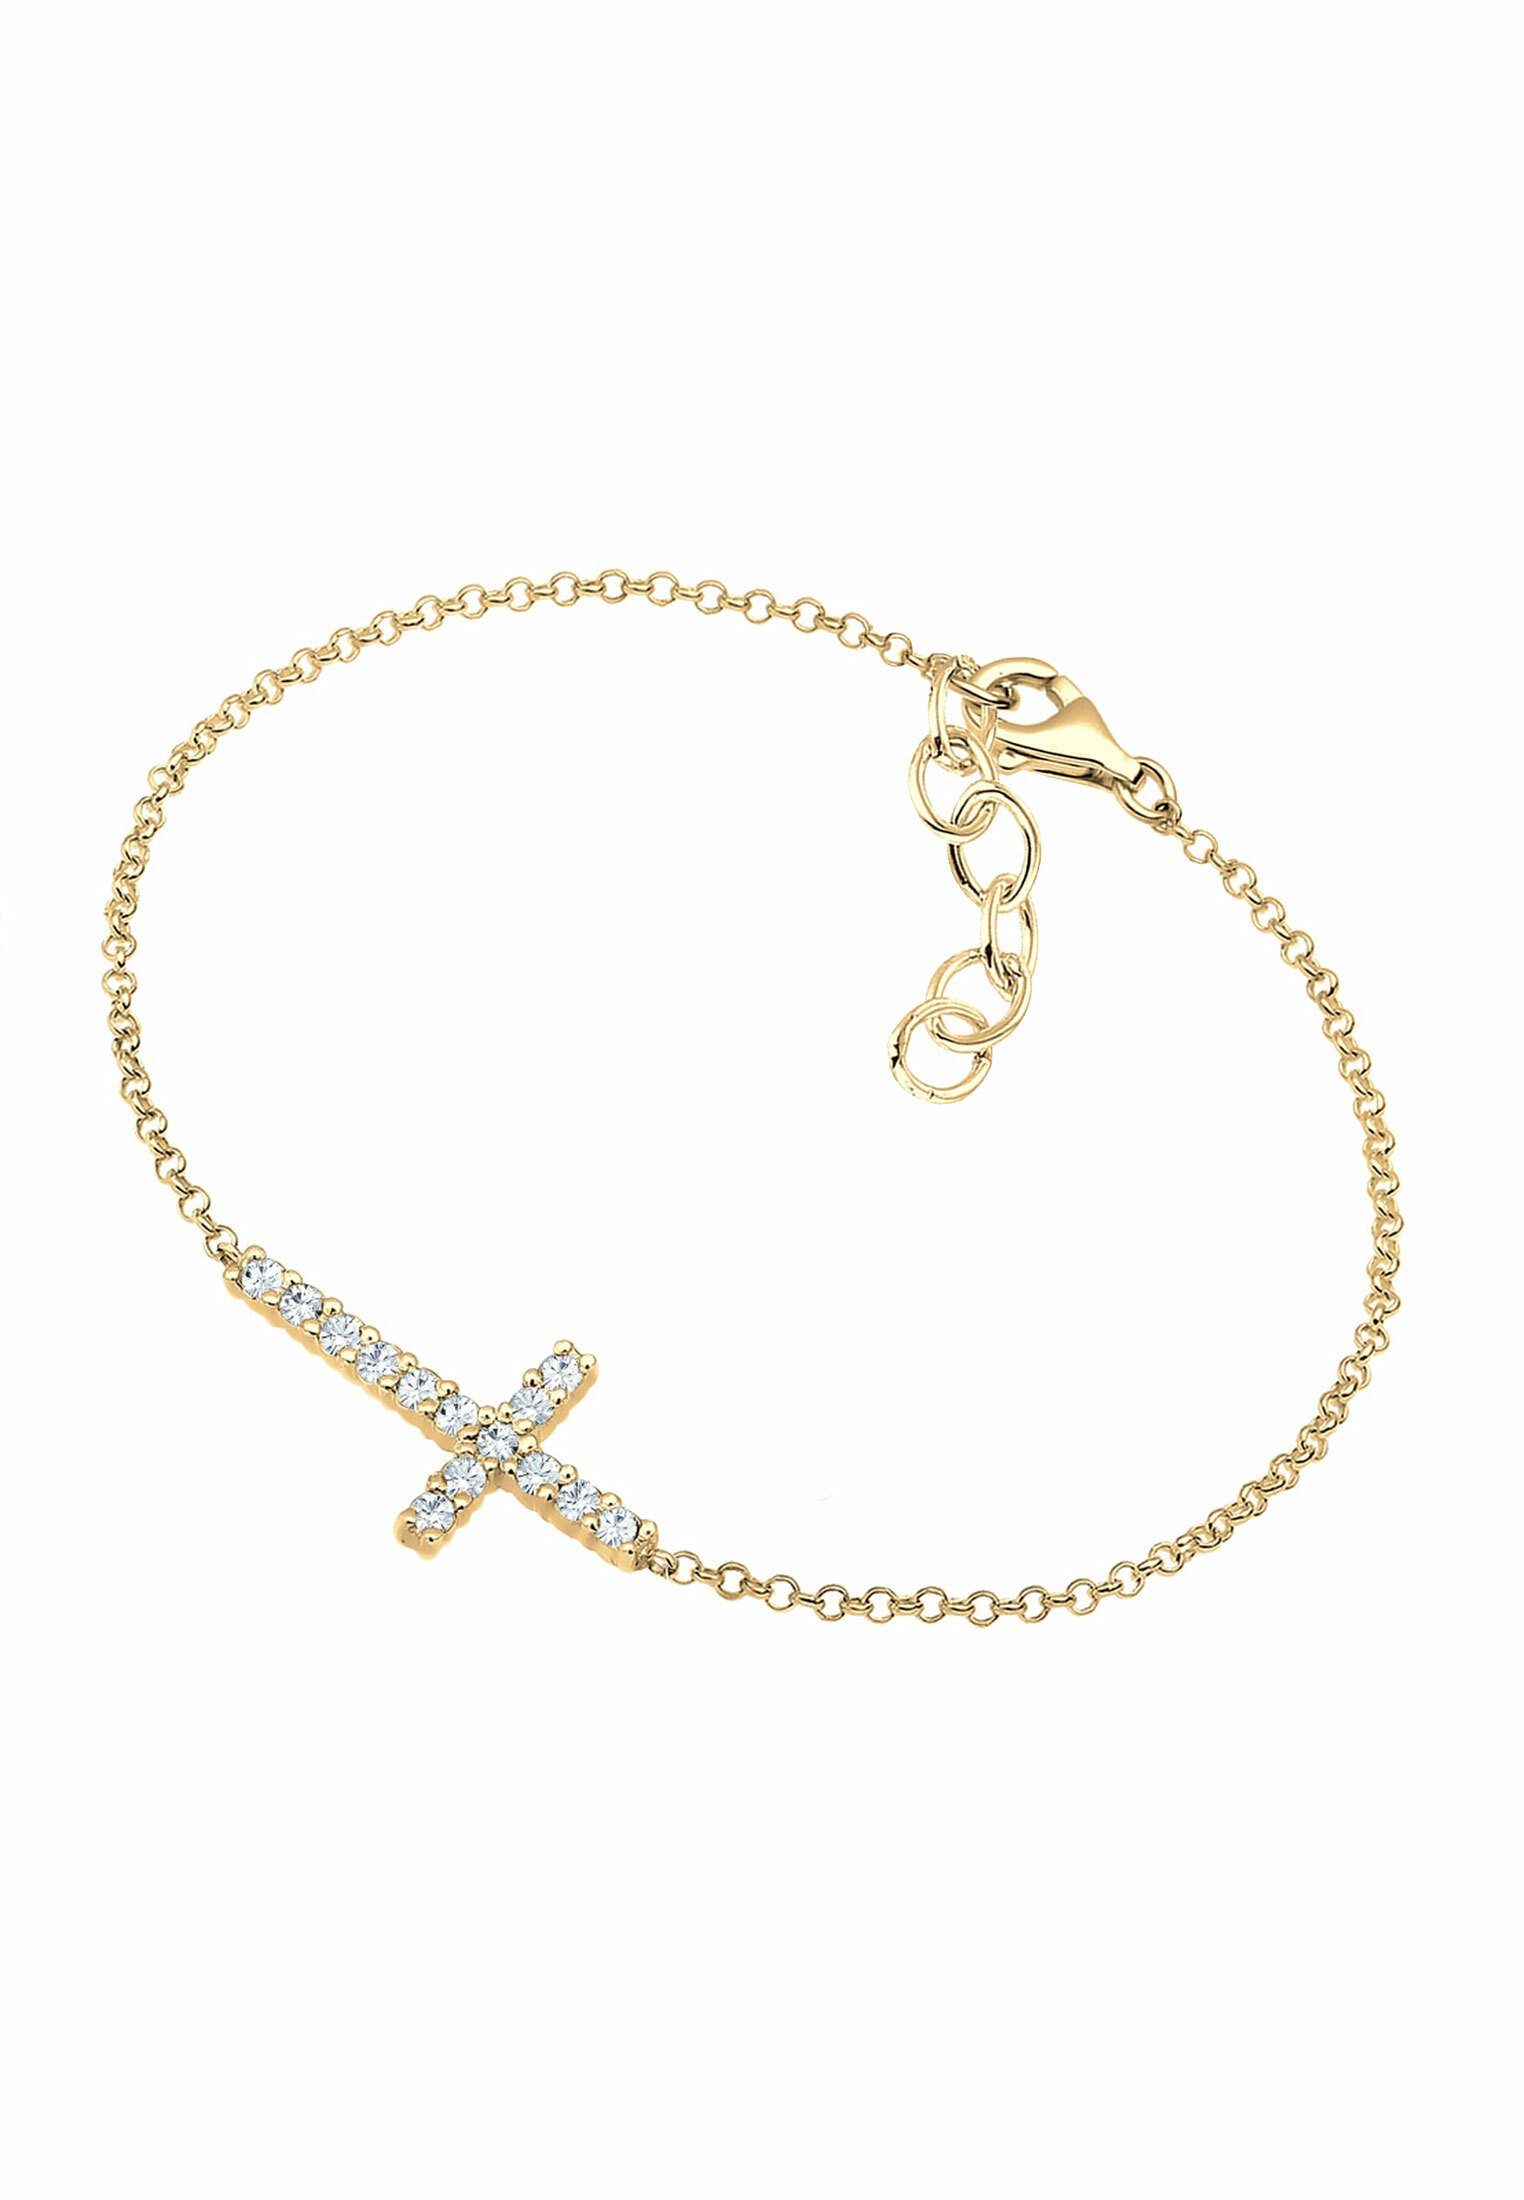 Armband Elli Glaube Elegant Funkelnd Silber Kristalle 925 Gold Kreuz